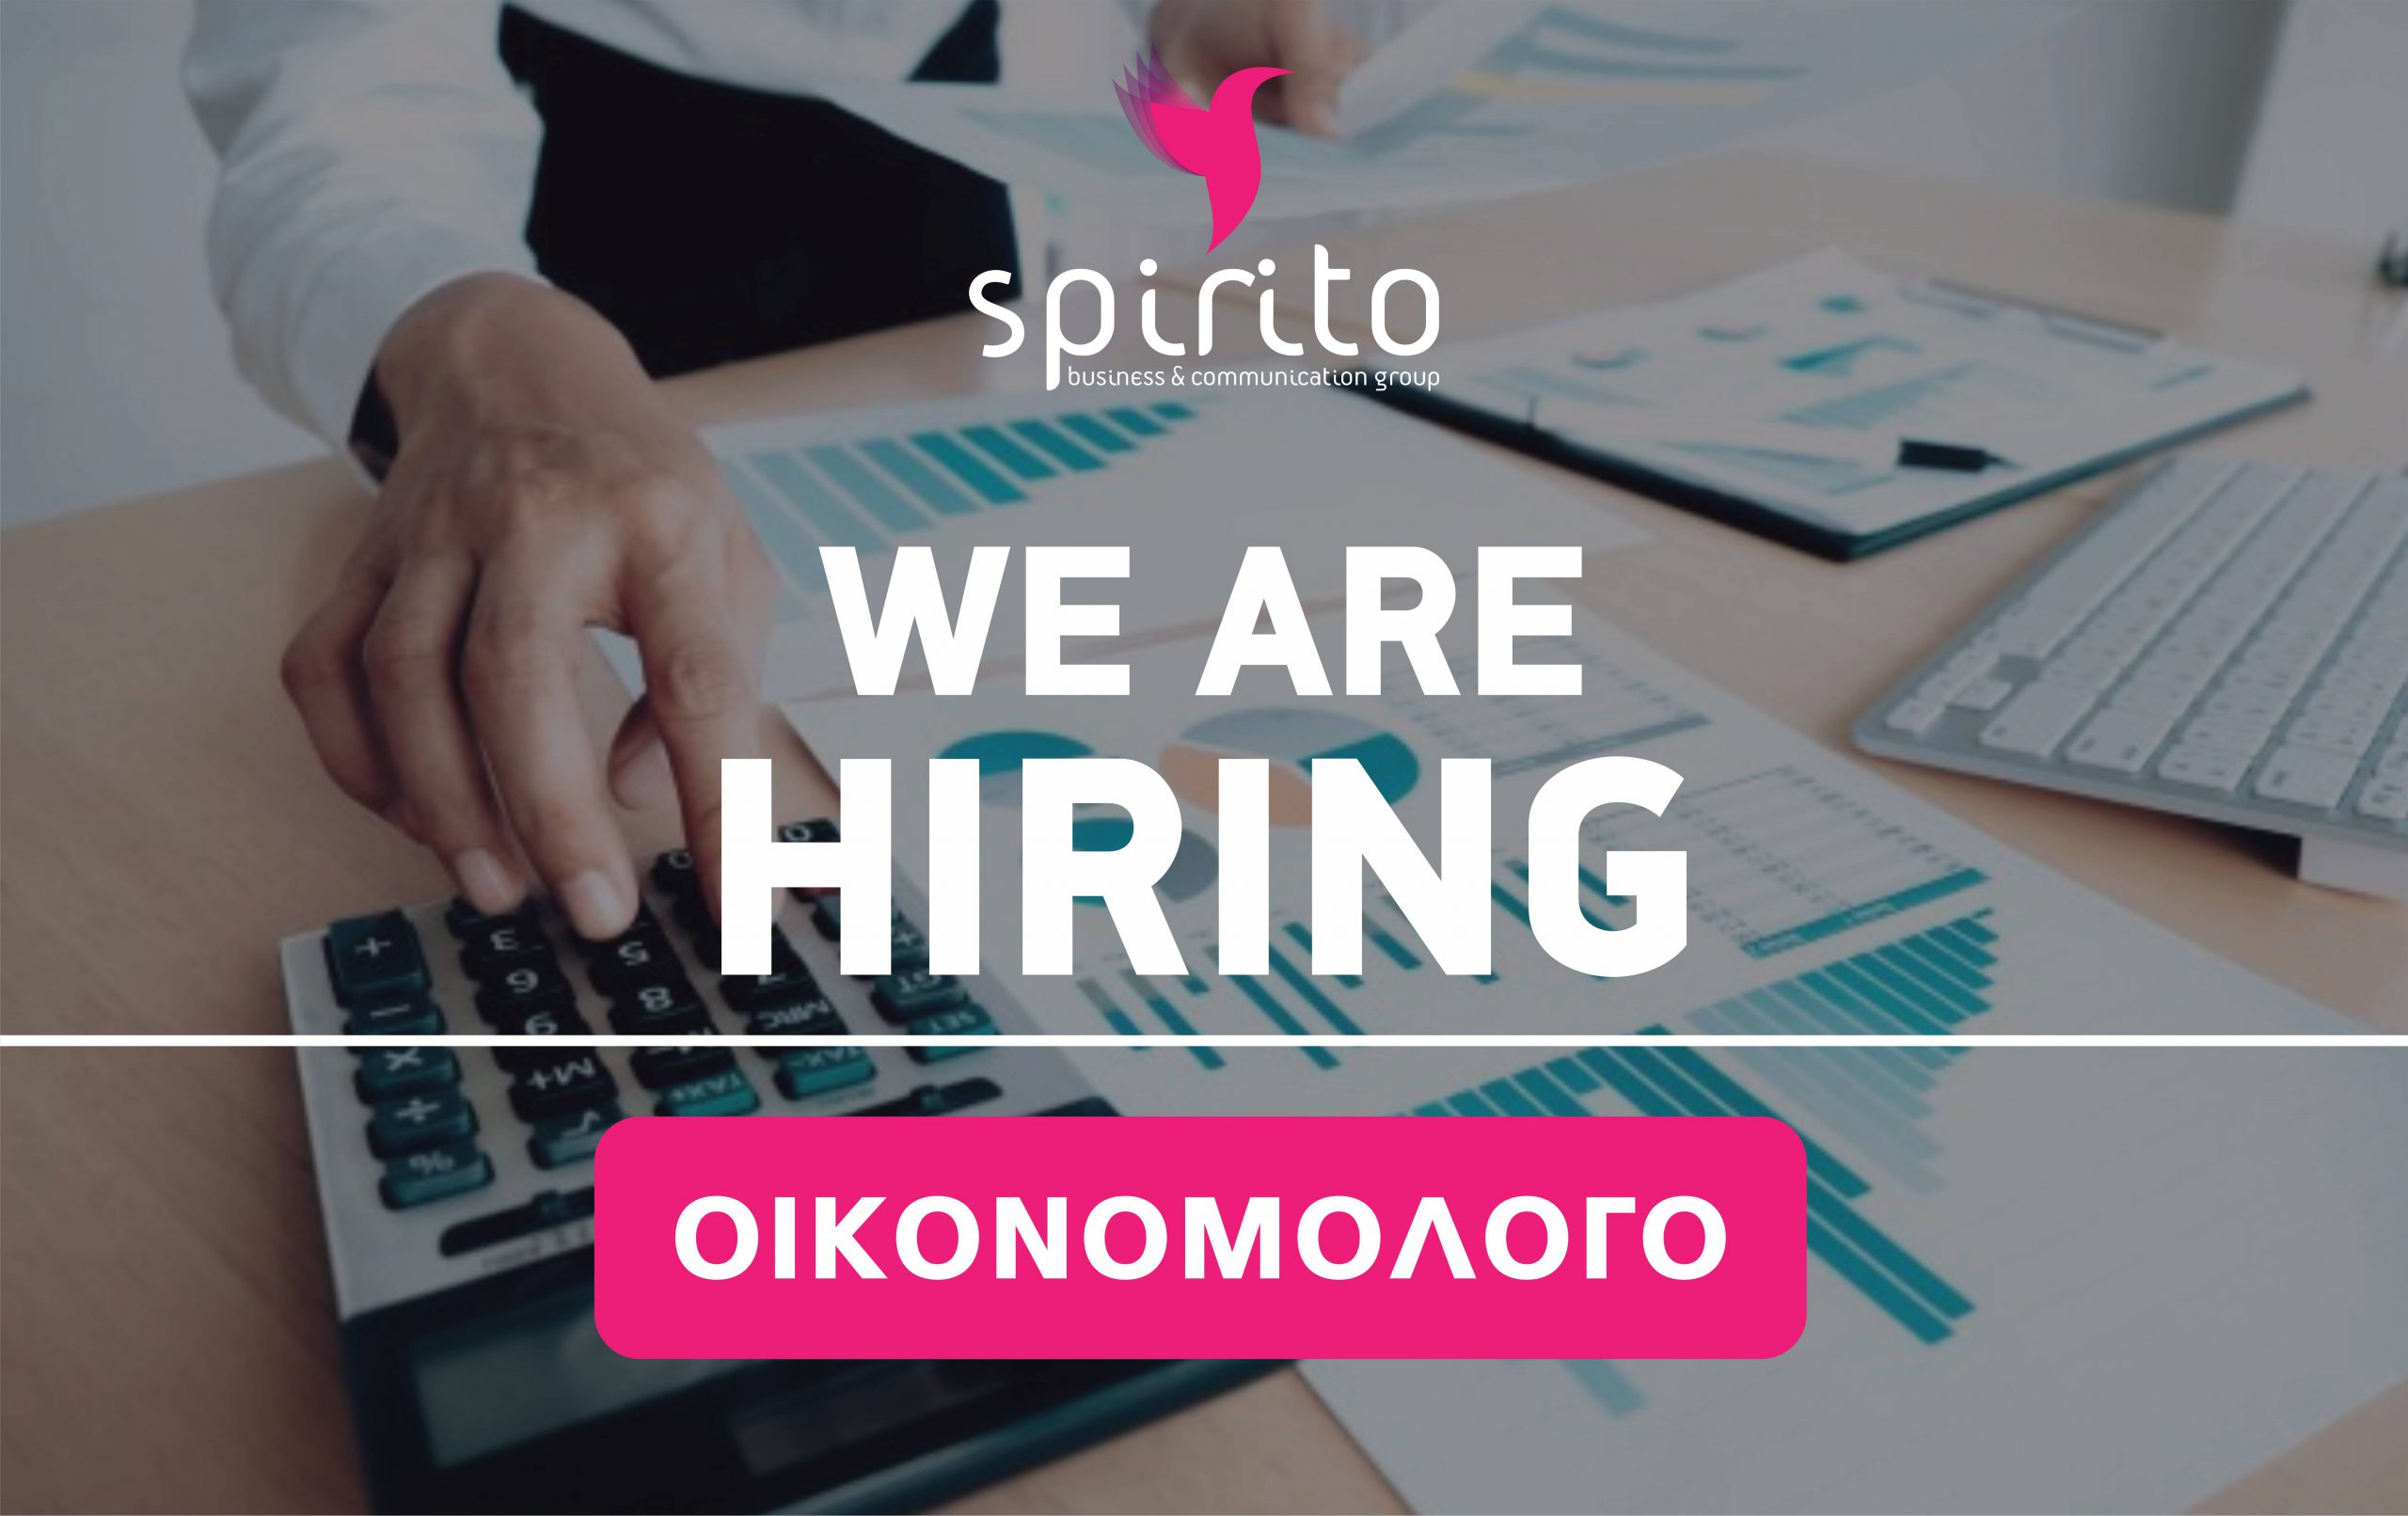 spirito we are hiring oikonomologo scaled